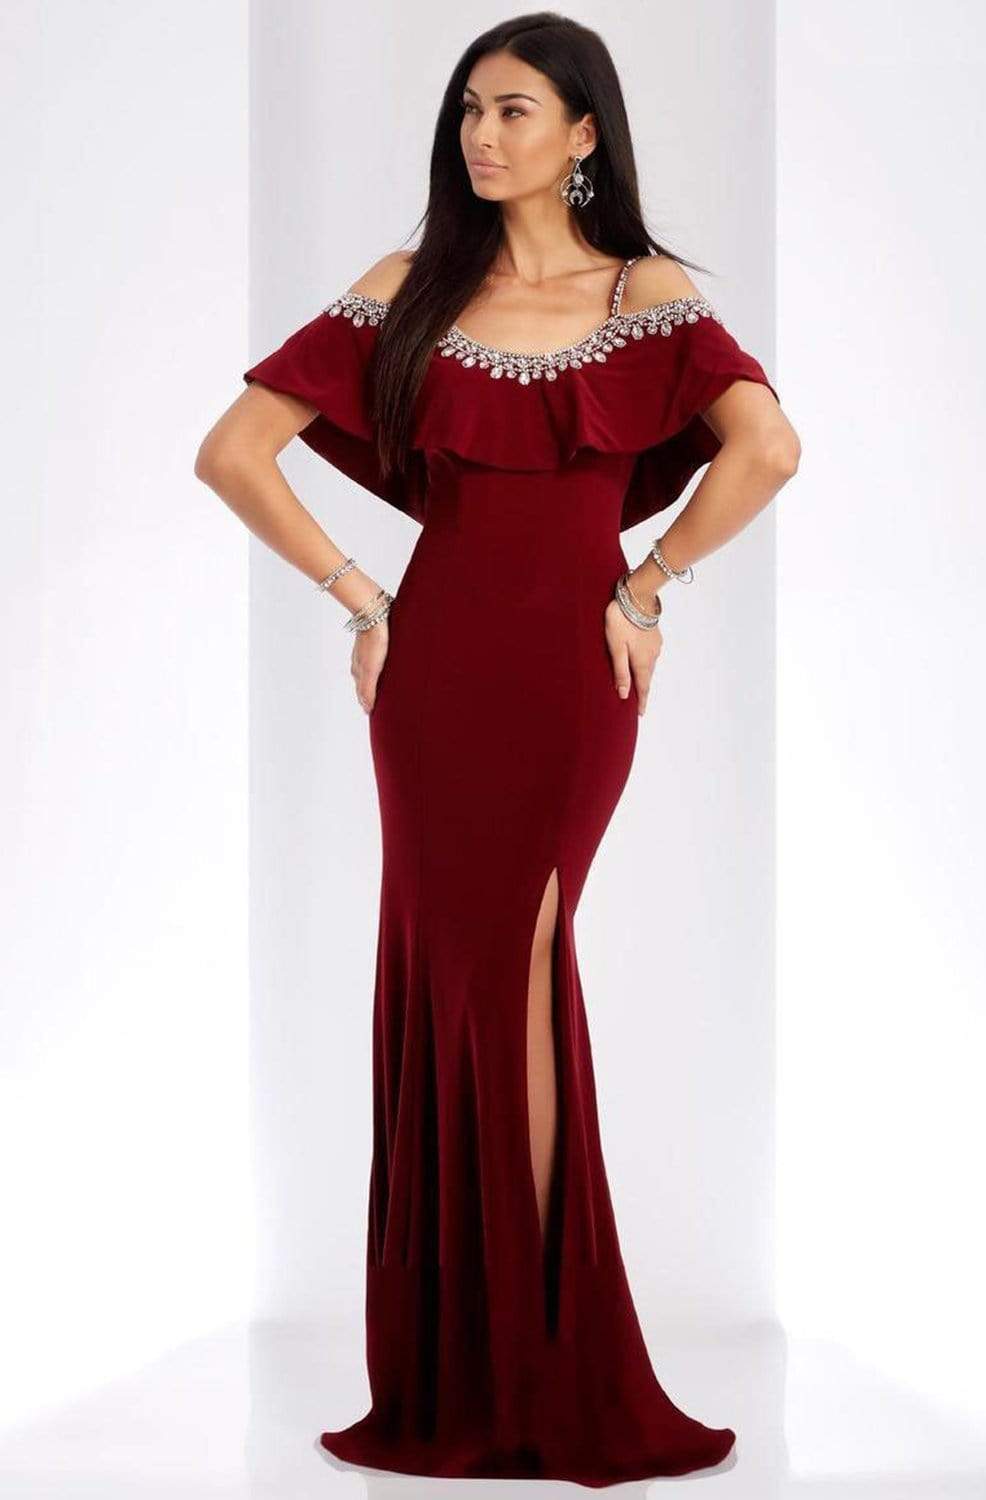 Clarisse - 3497 Jeweled Scoop Neck Sheath Dress Special Occasion Dress 0 / Wine